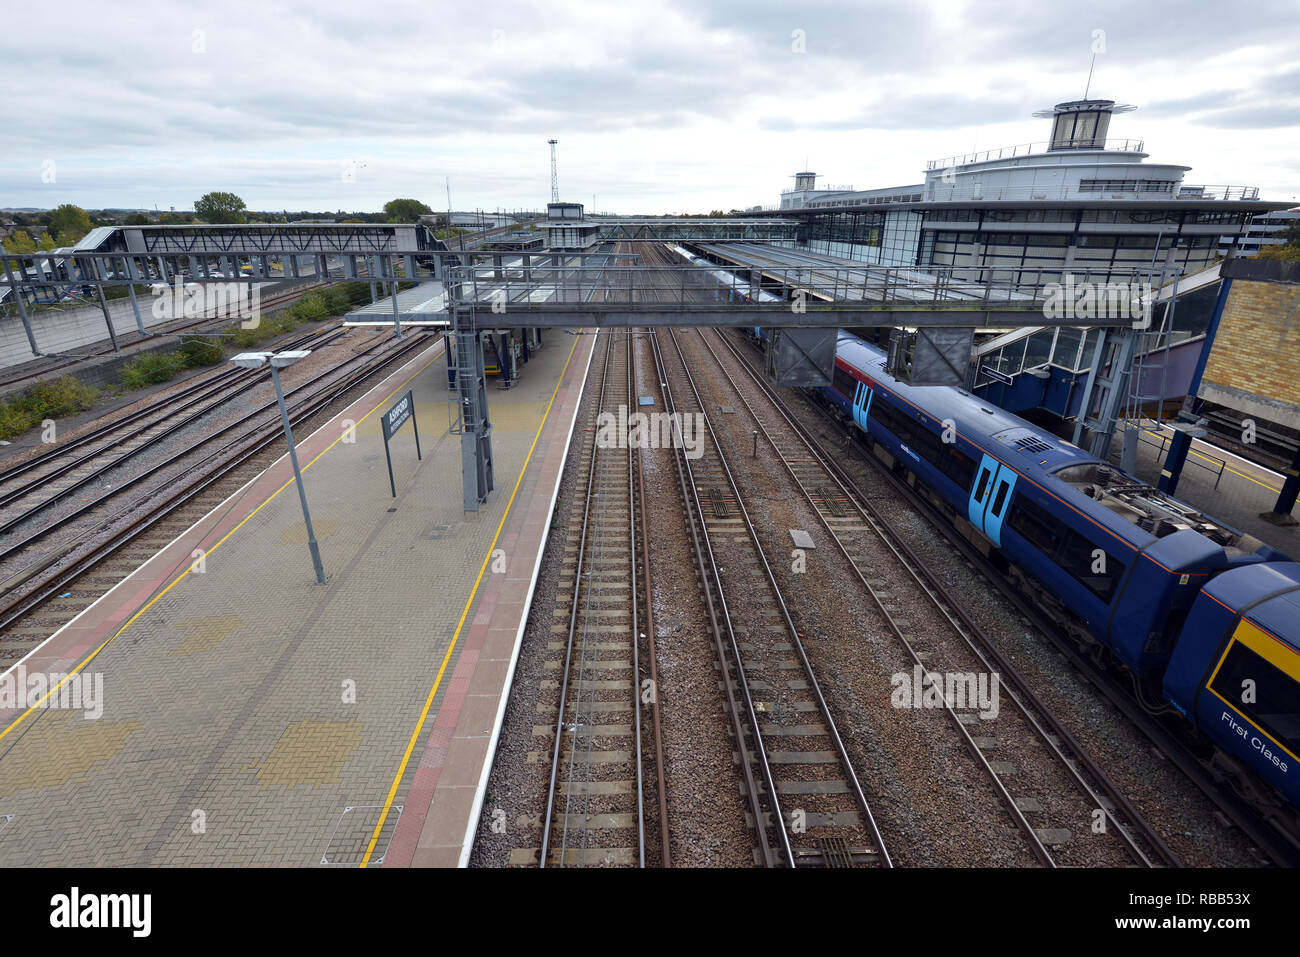 Ashford International railway station - Wikipedia